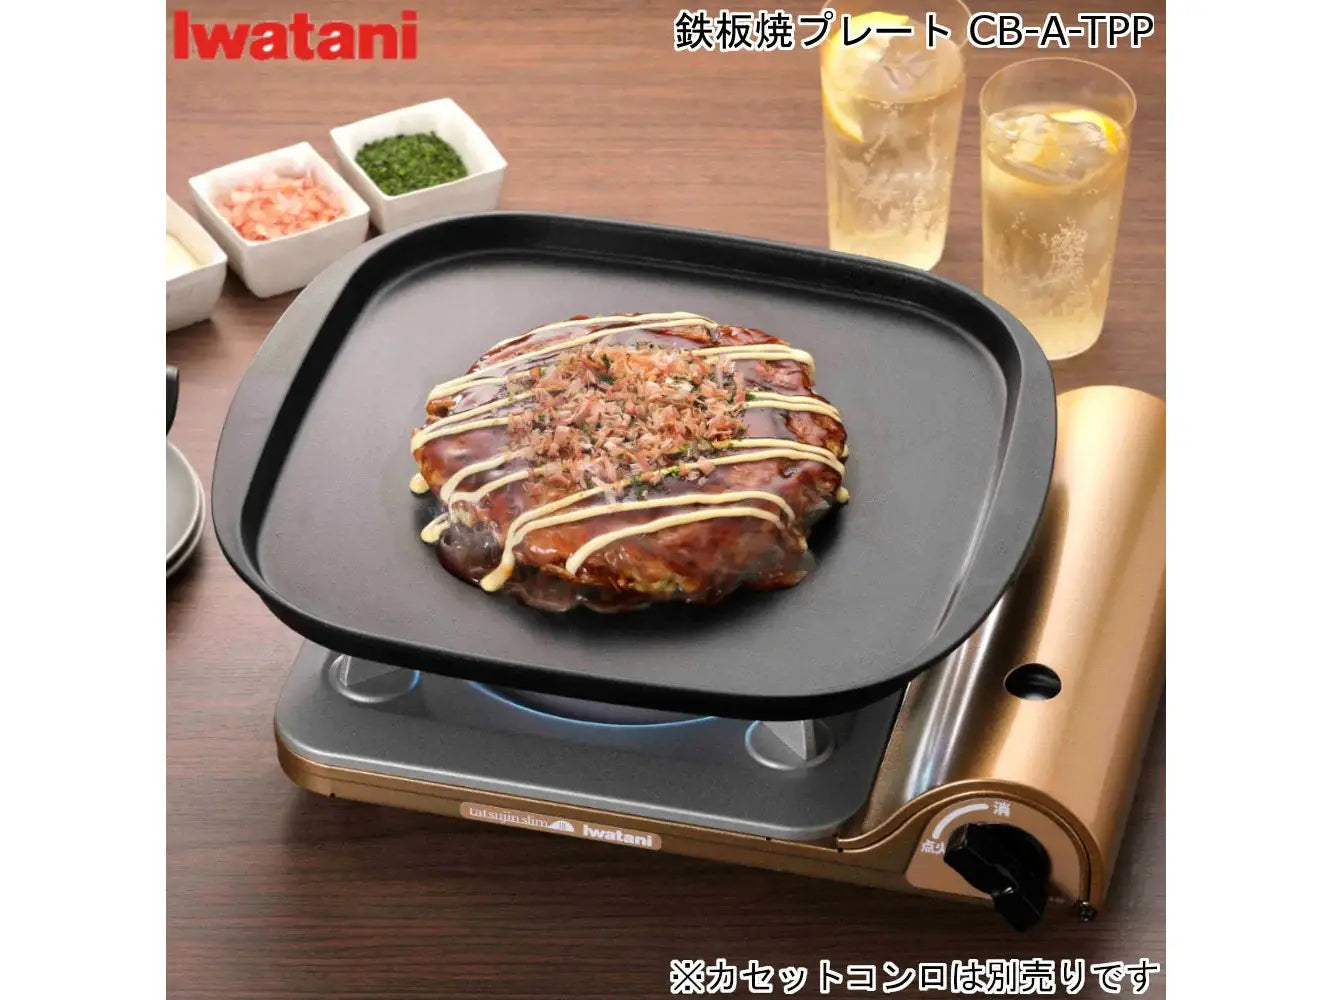 Iwatani CB-A-TPP Teppanyaki Non-stick Plate